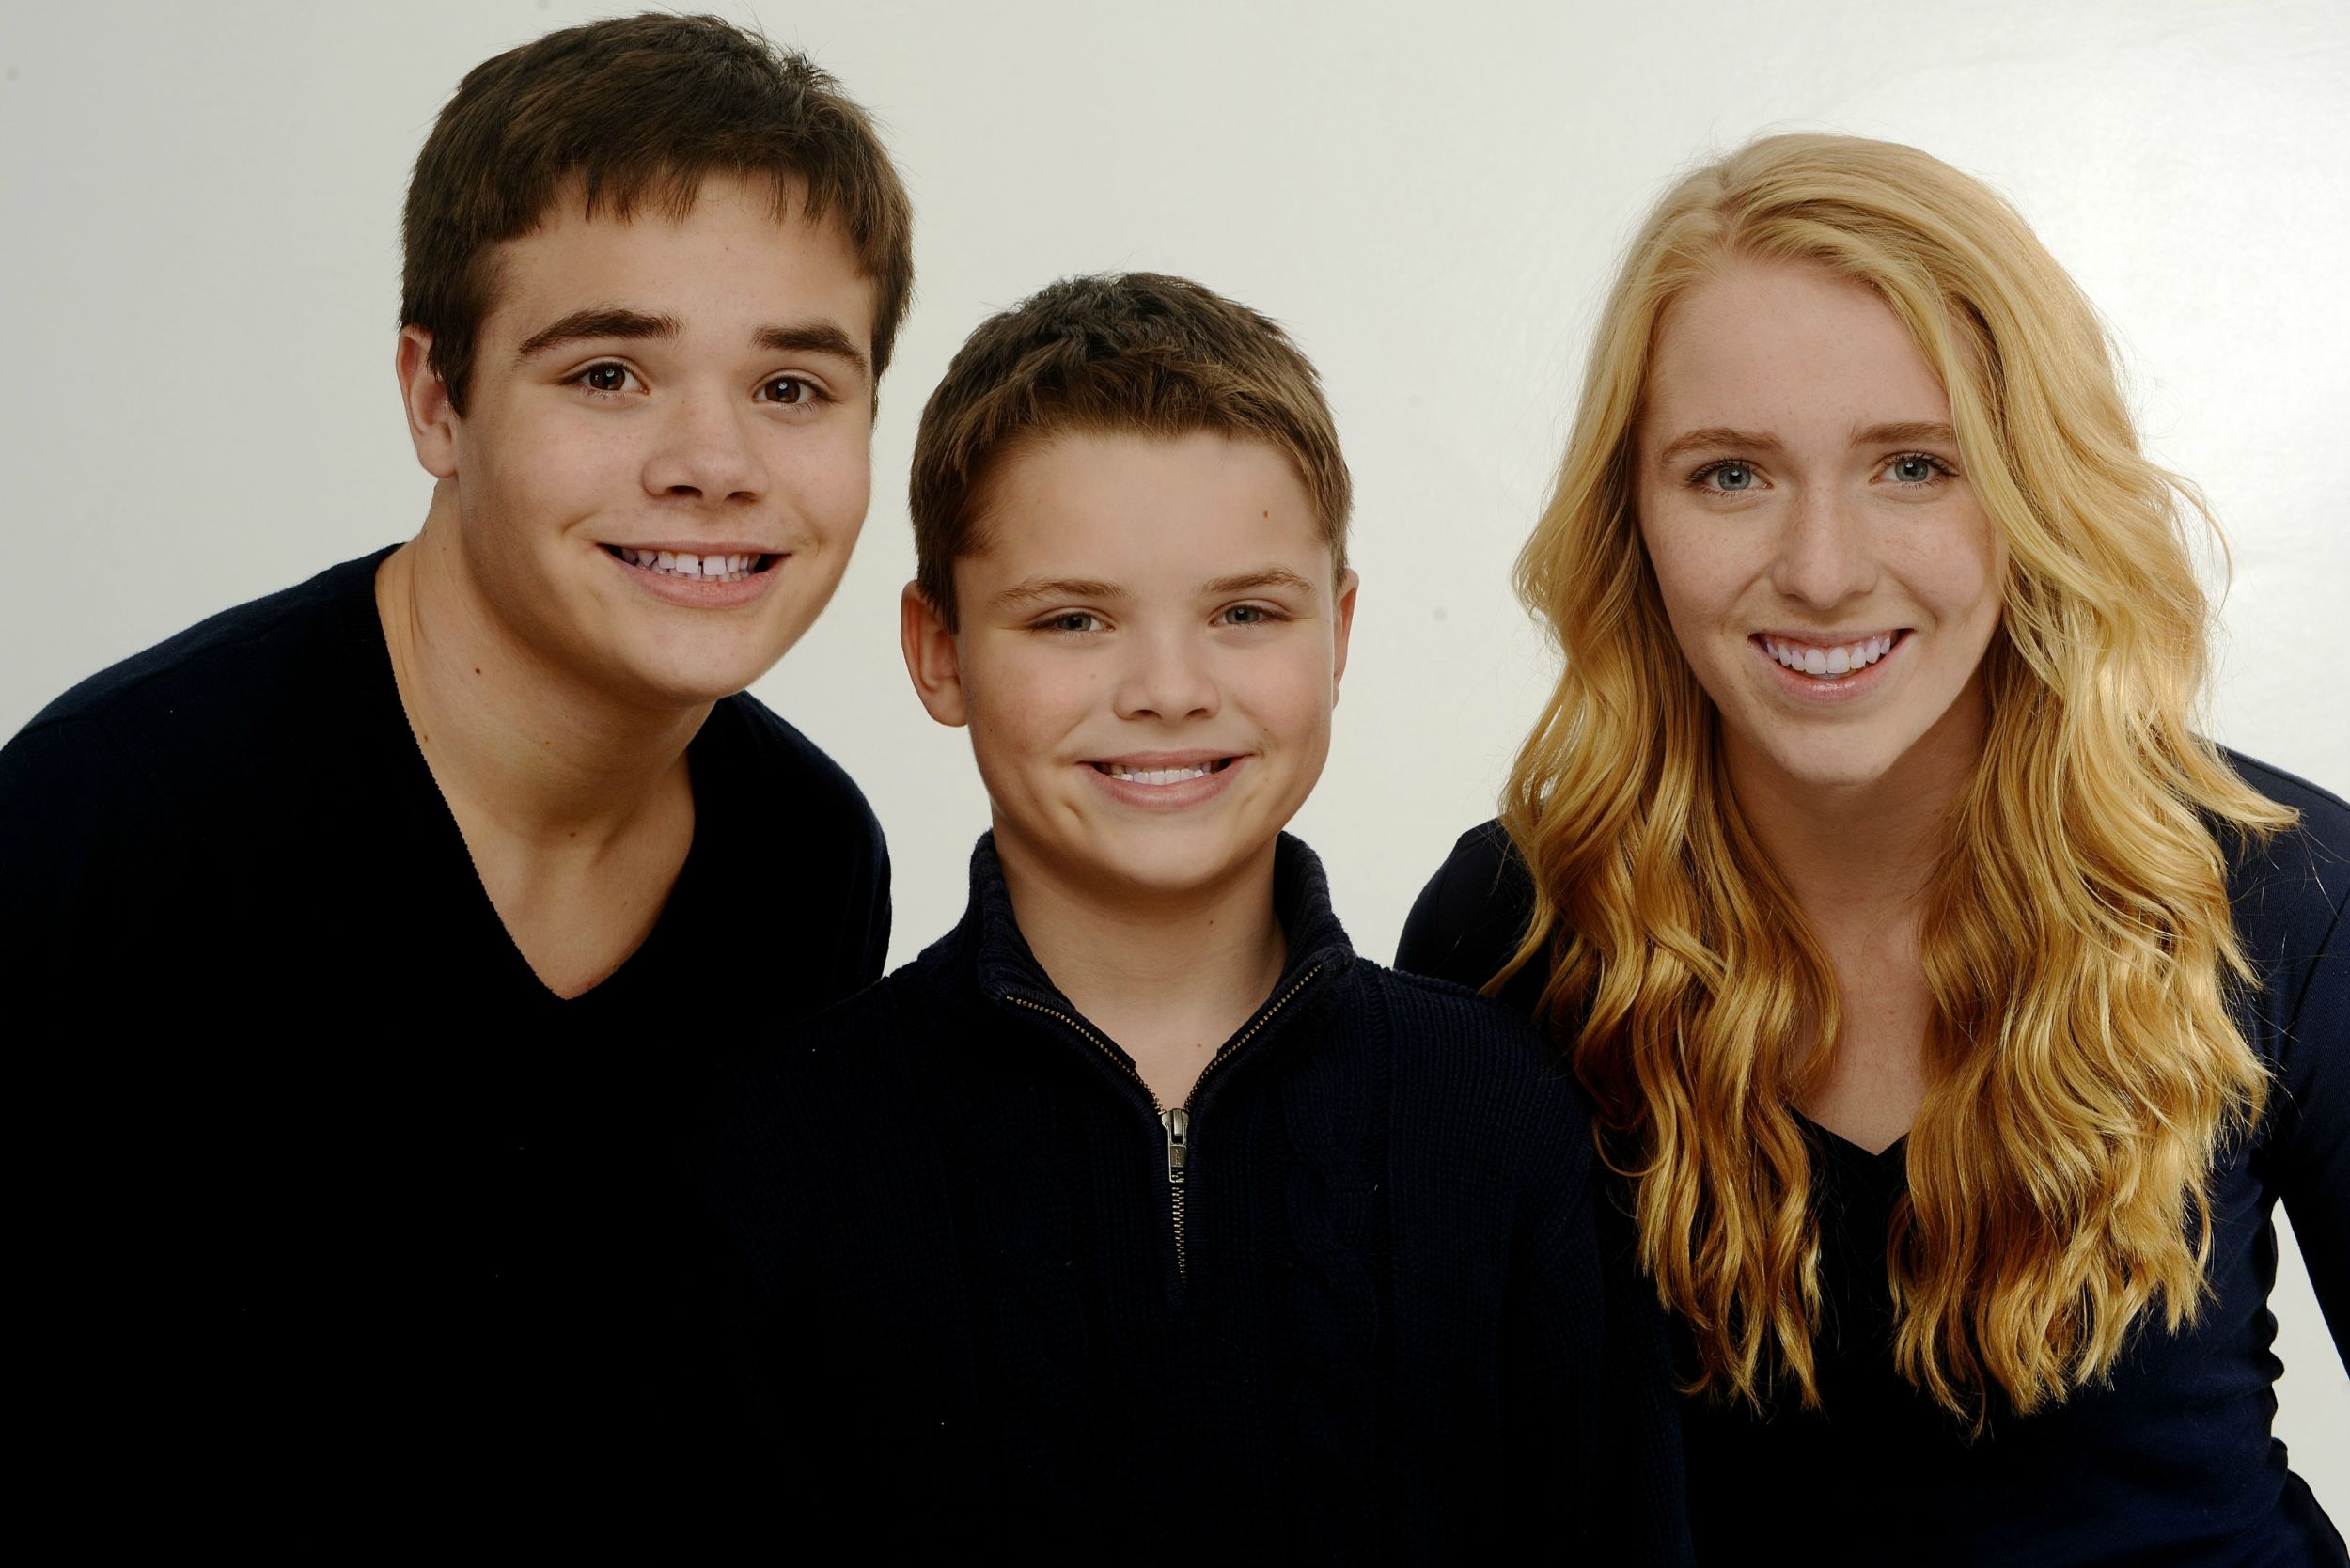 Mads Finegan-Smith, Liam Finegan-Smith and Bailey Morgan. All three are Sag-Aftra actors and siblings